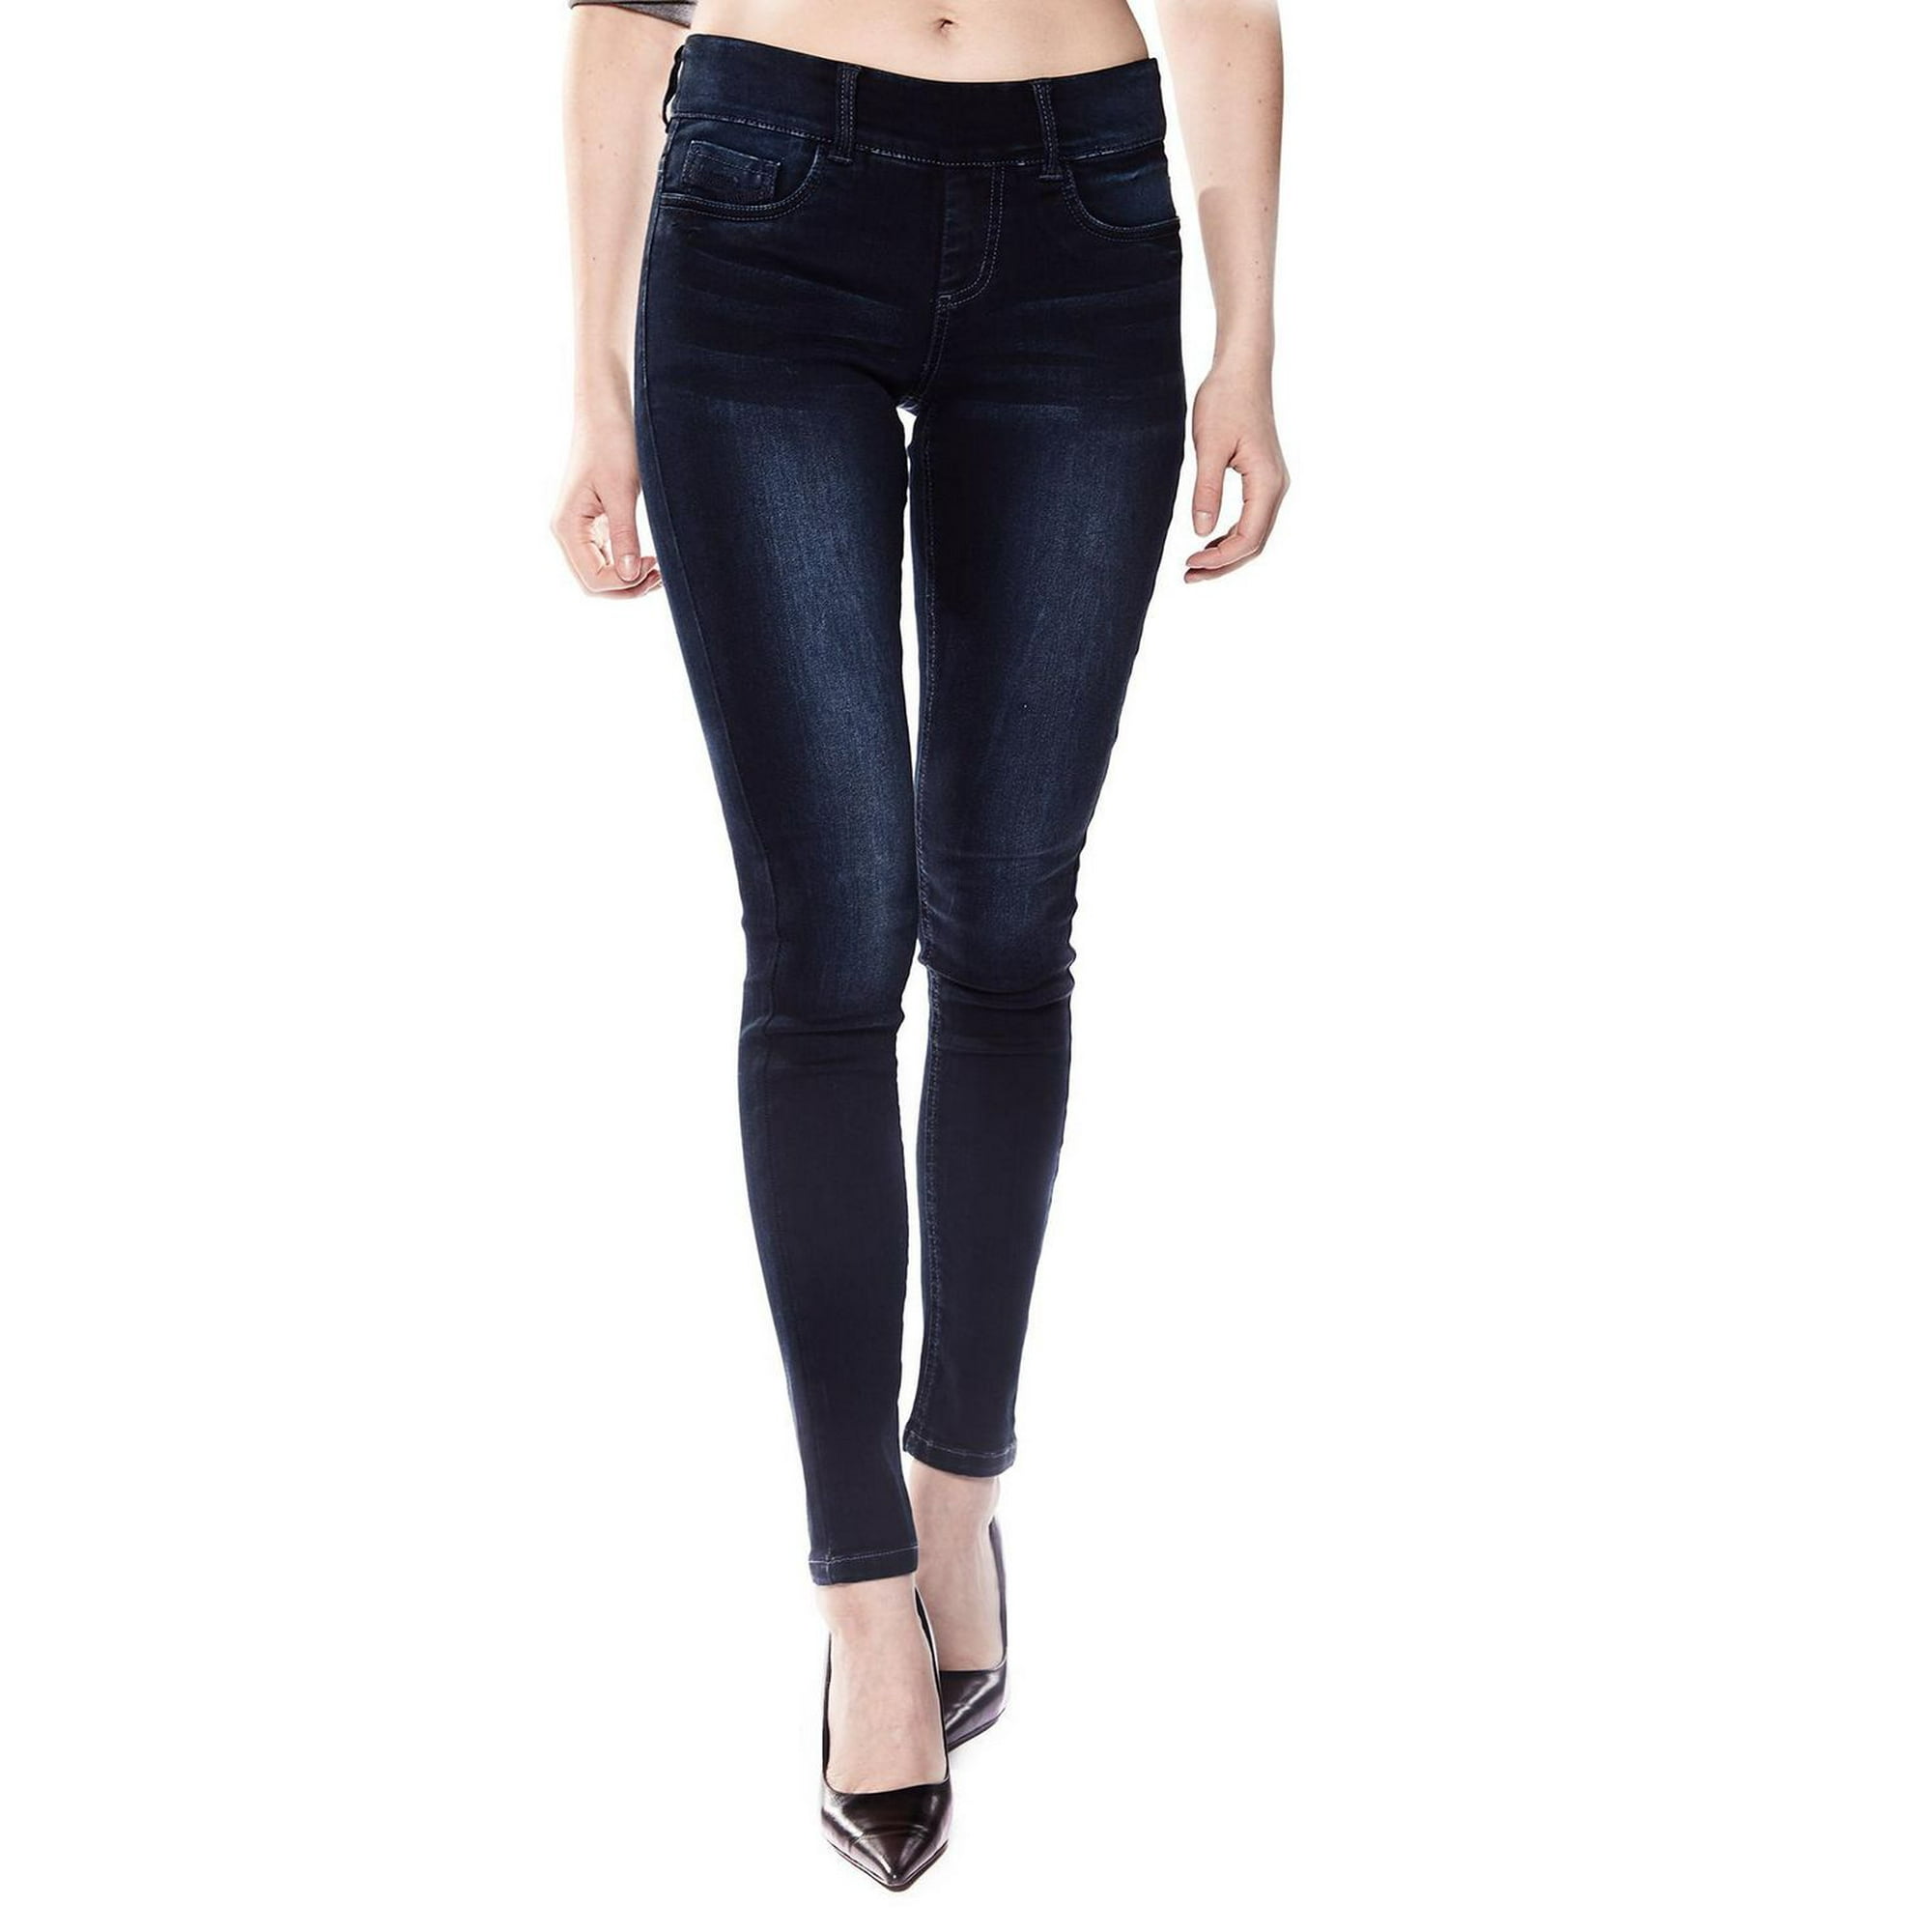 RIVERS - Womens Jeans - Blue Jeggings - Cotton Leggings - Smart